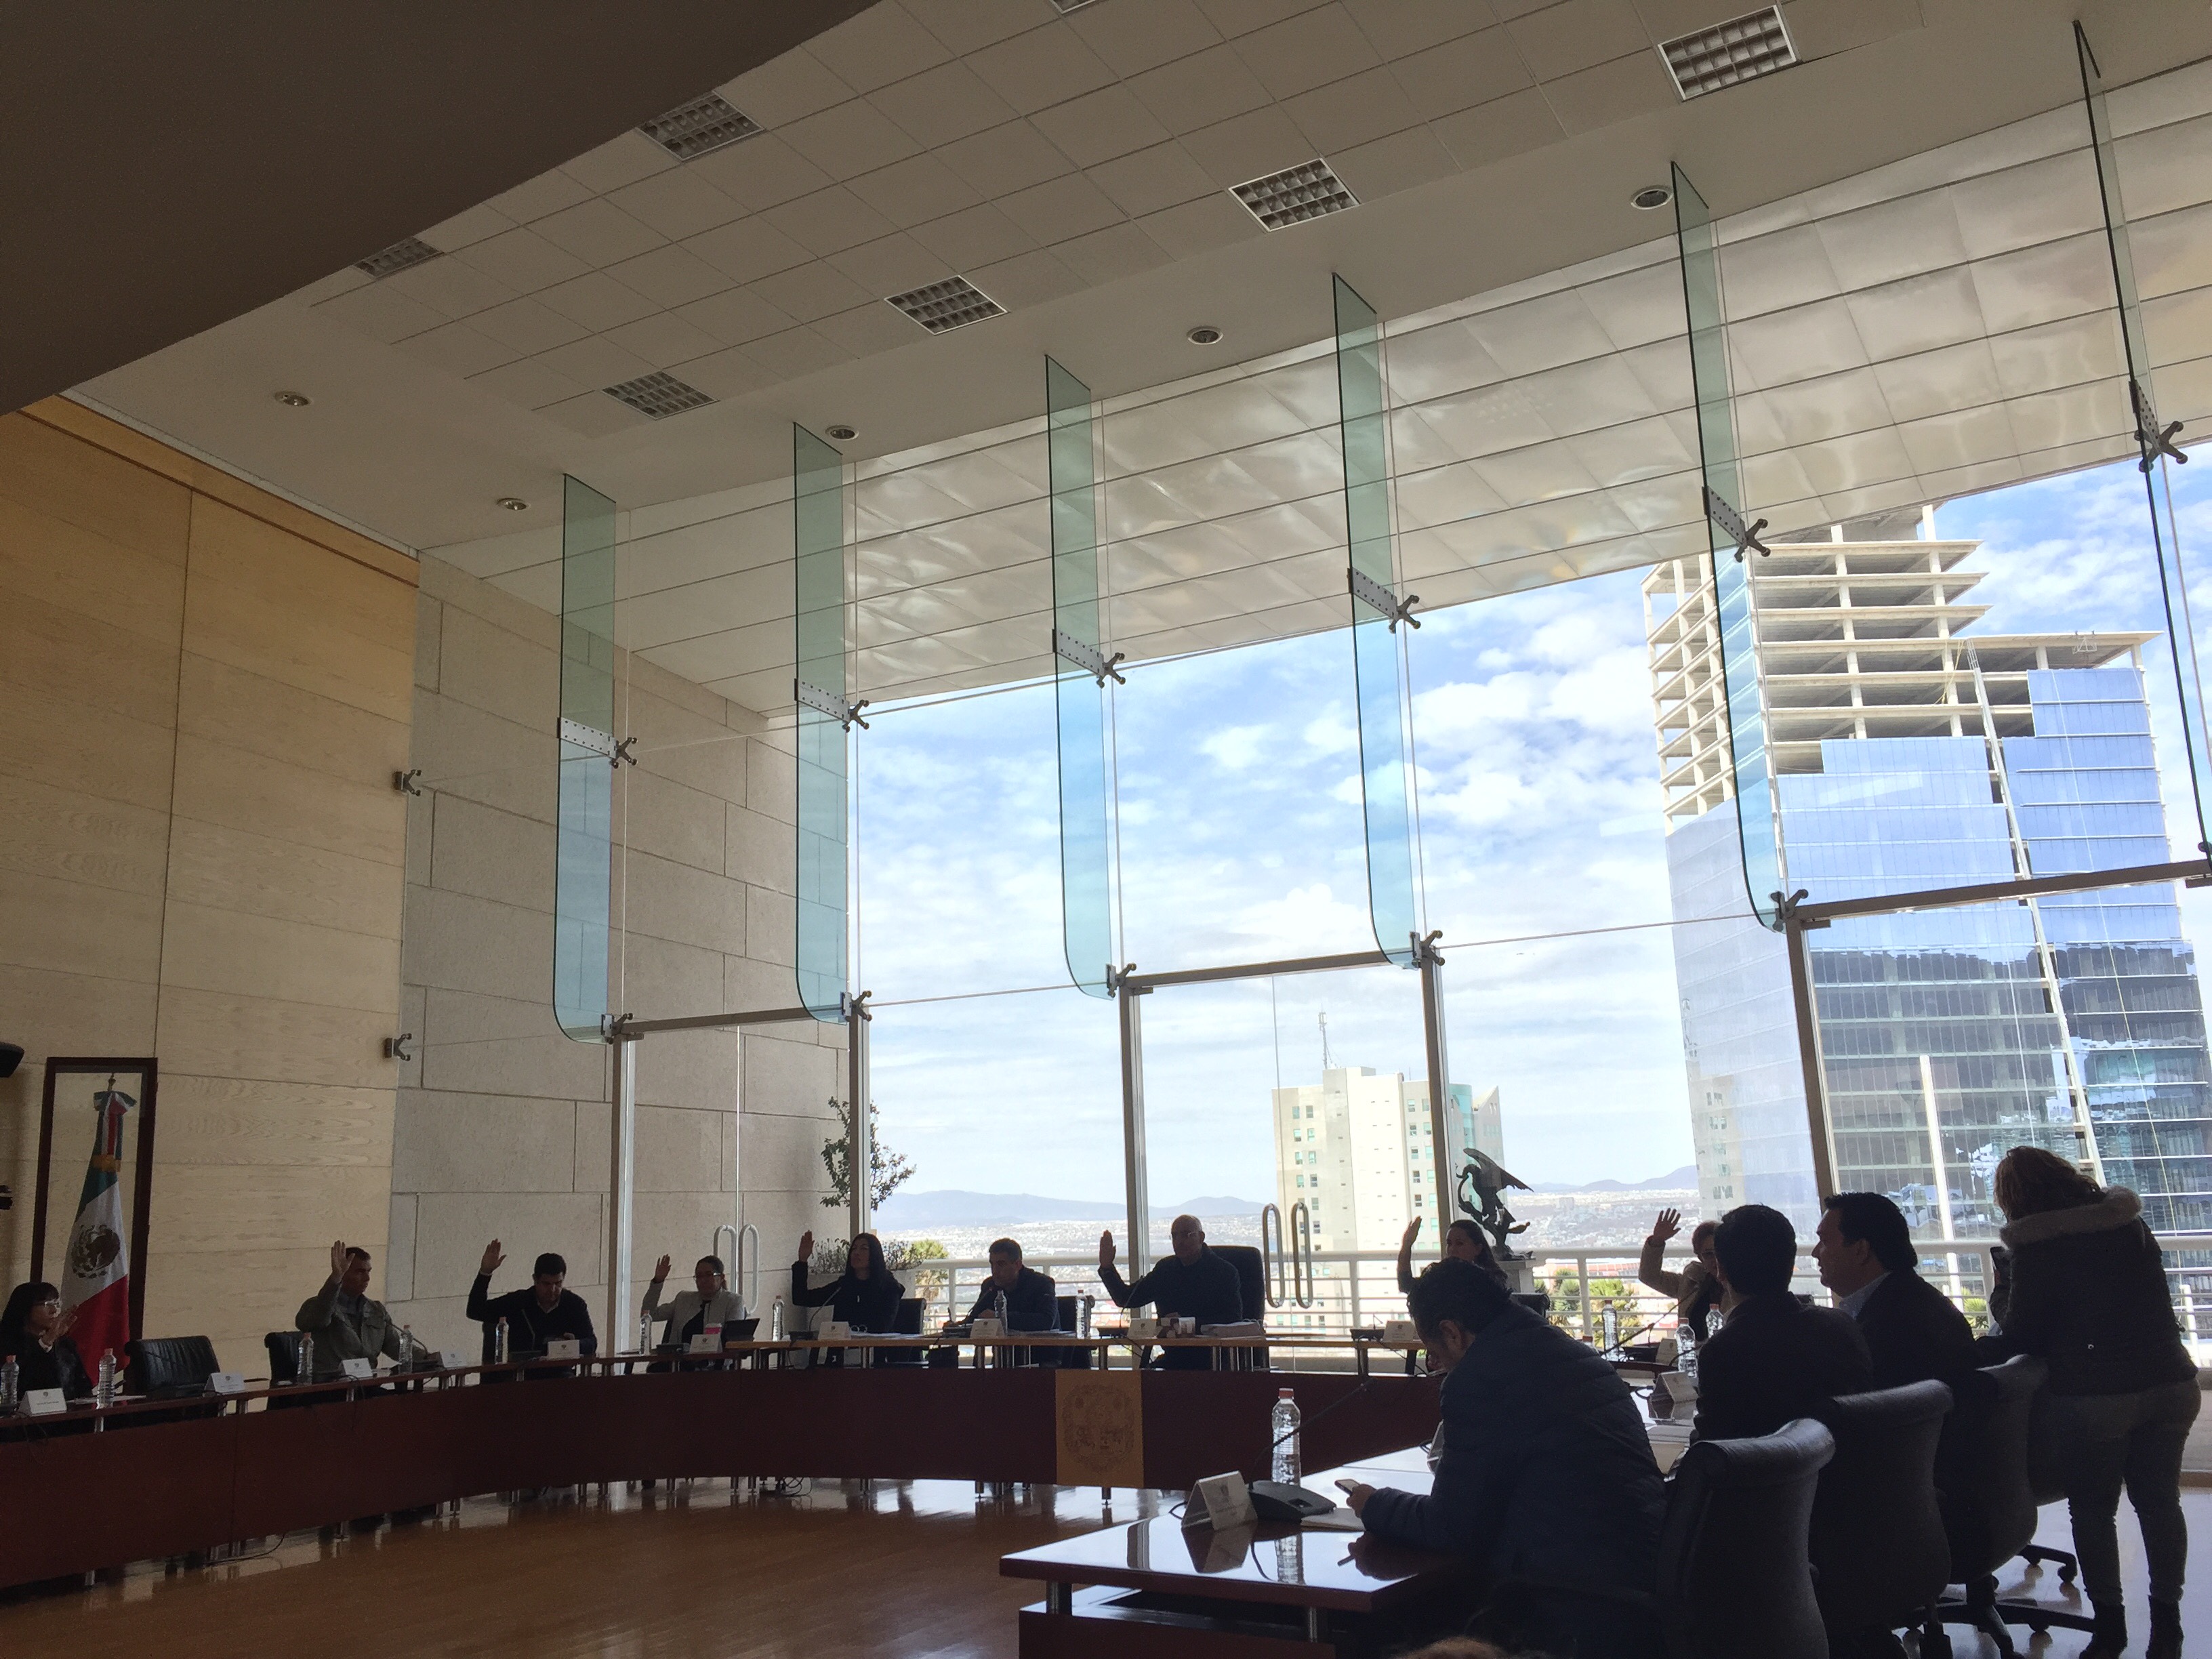  Municipio de Querétaro tendrá sesión extraordinaria de cabildo en auditorio de la UAQ